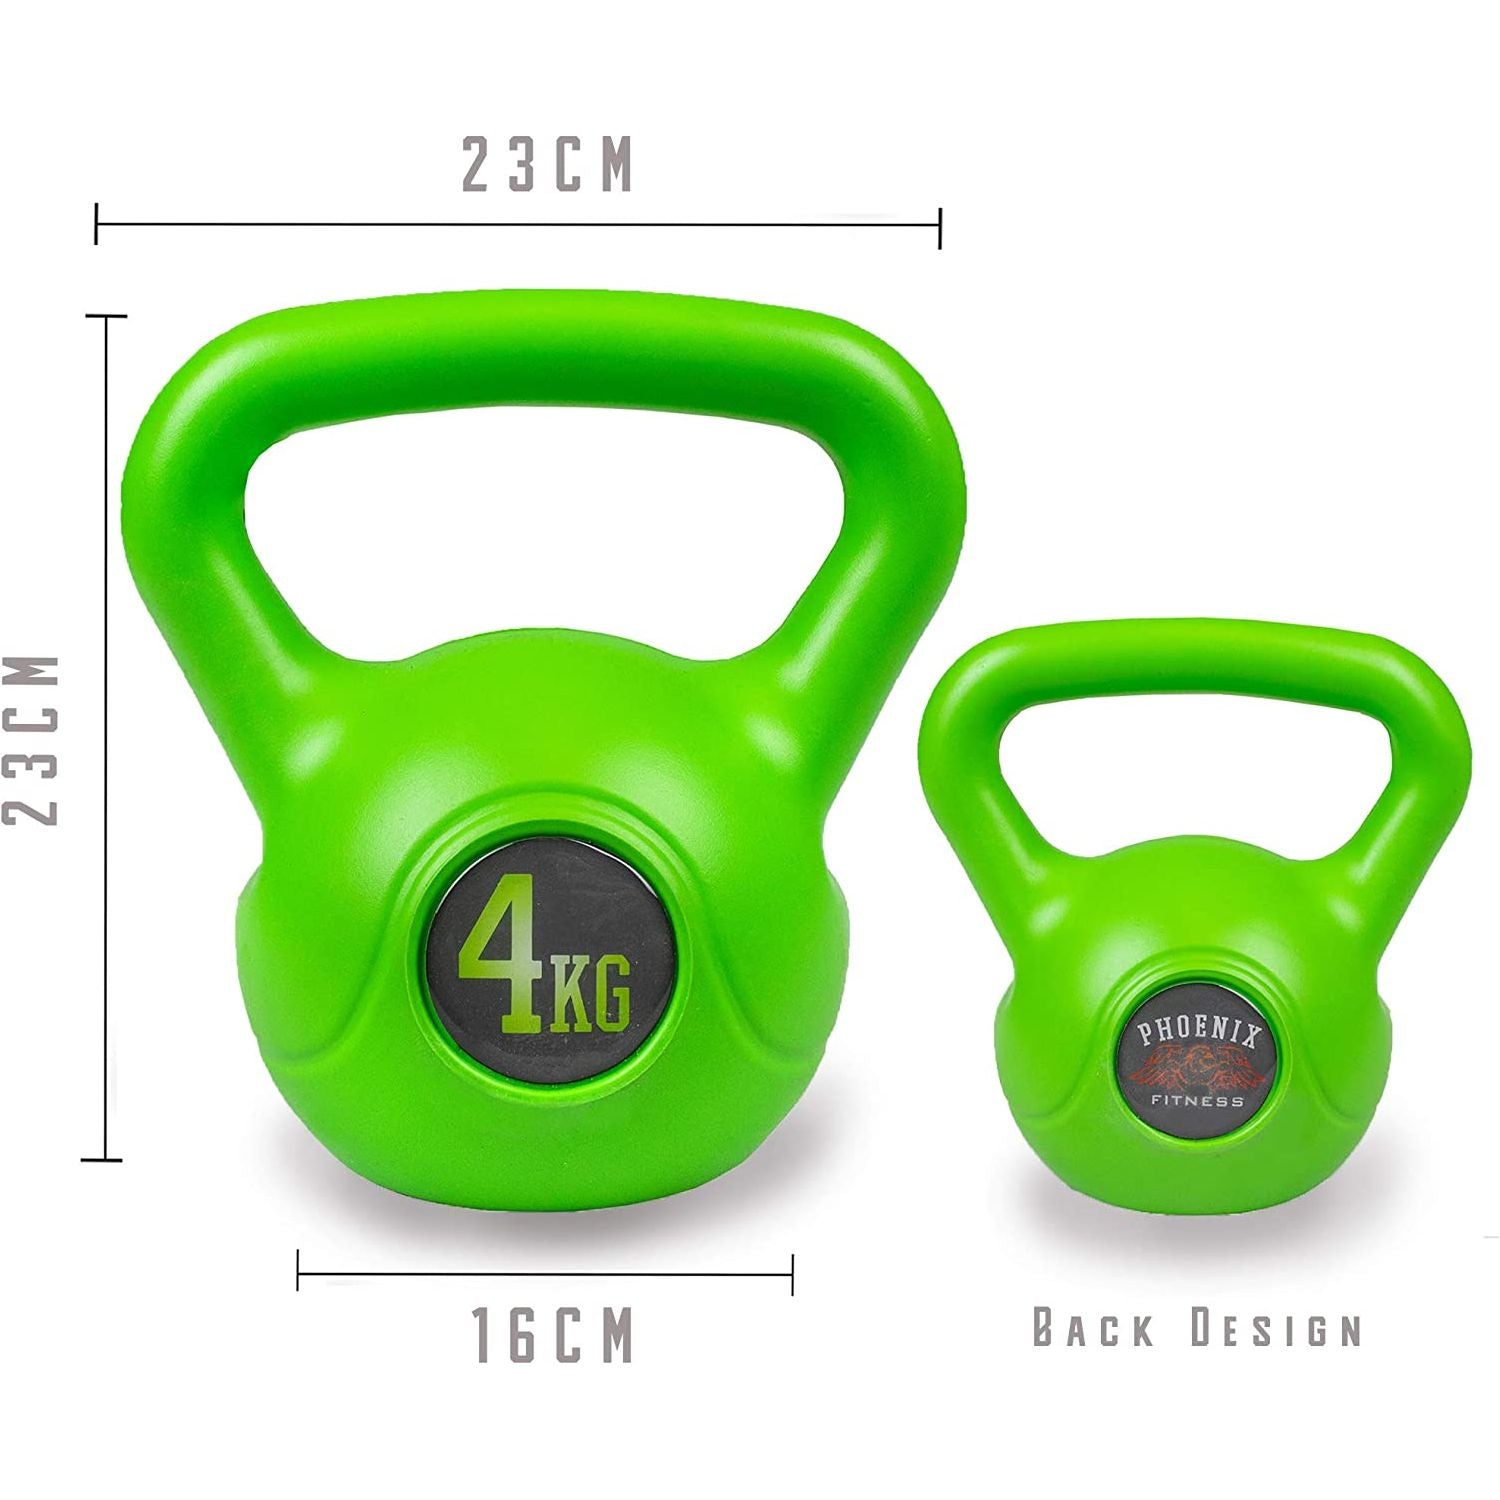 Vinyl 4KG Kettlebell Heavy Weight Kettle Bell Cardio Training Green